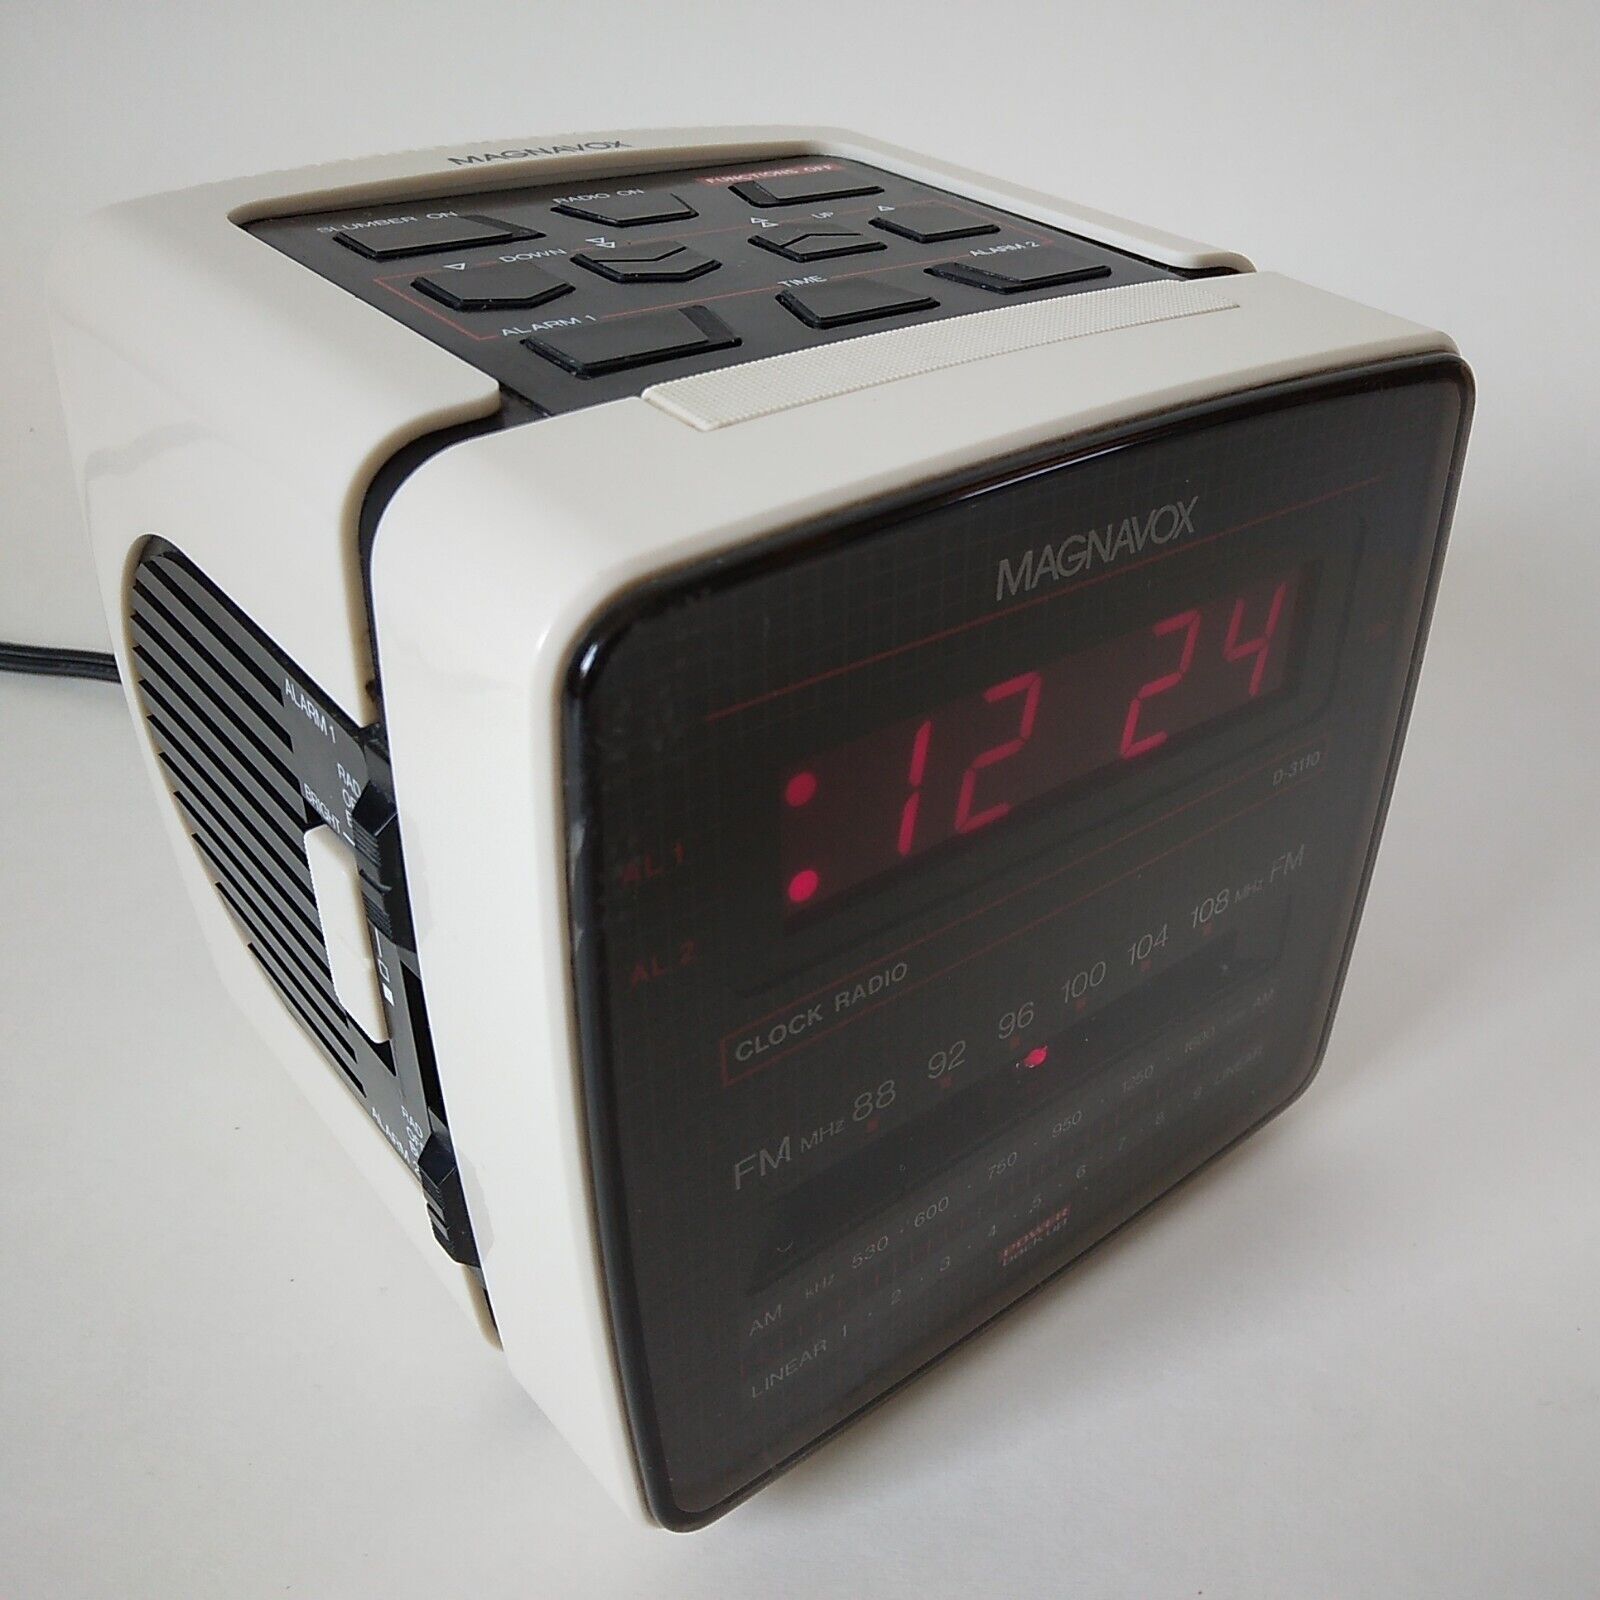 Magnavox D3110/37 White Cube Radio Alarm Clock-1985-AM/FM-Red LED-Tested Works